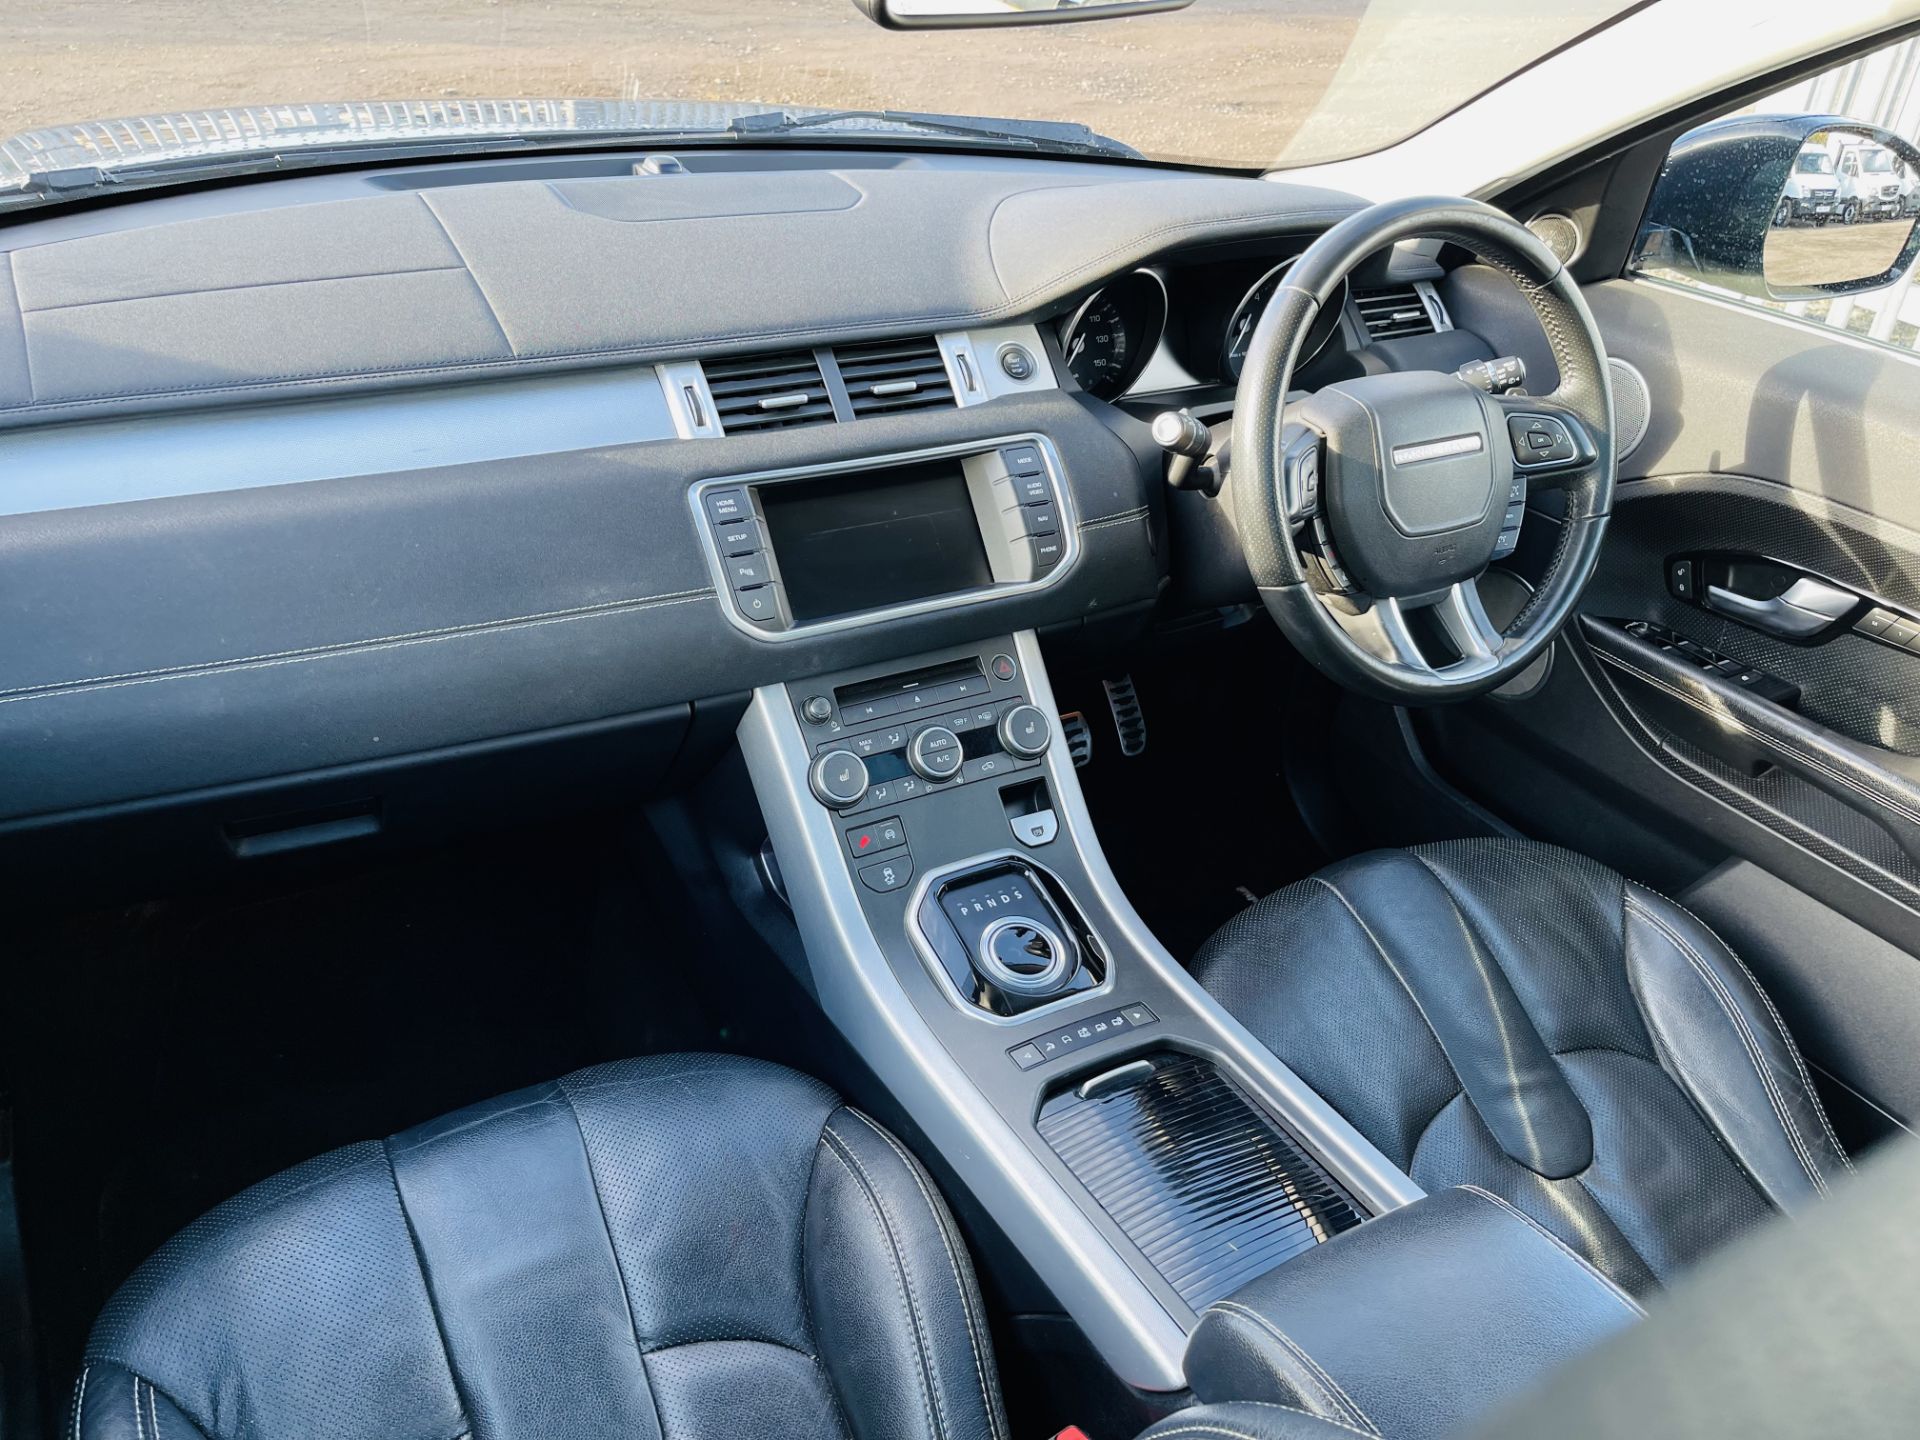 Range Rover Evoque Dynamic 2.2 SD4 4WD Commandshift 2015 '15 Reg' Sat Nav - Panoramic Roof - Image 21 of 38